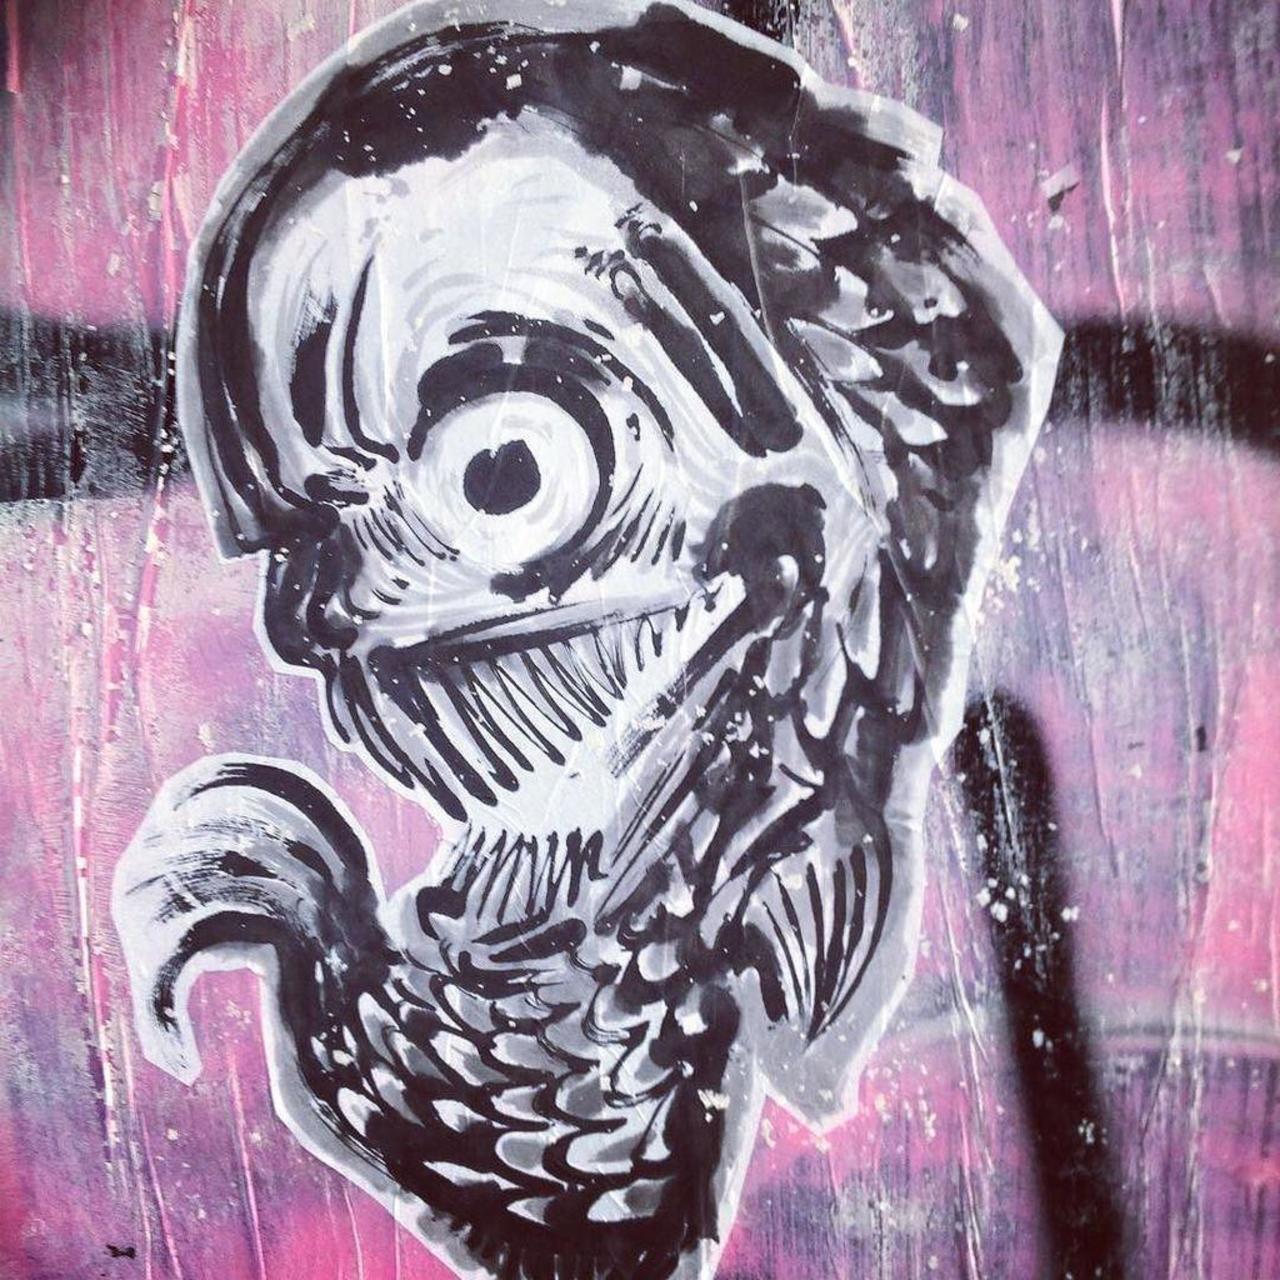 RT @StArtEverywhere: Piranha #street #streetart #streetartparis #graff #graffiti #wallart #sprayart #urban #urbain http://t.co/ZHZMTEtiH4